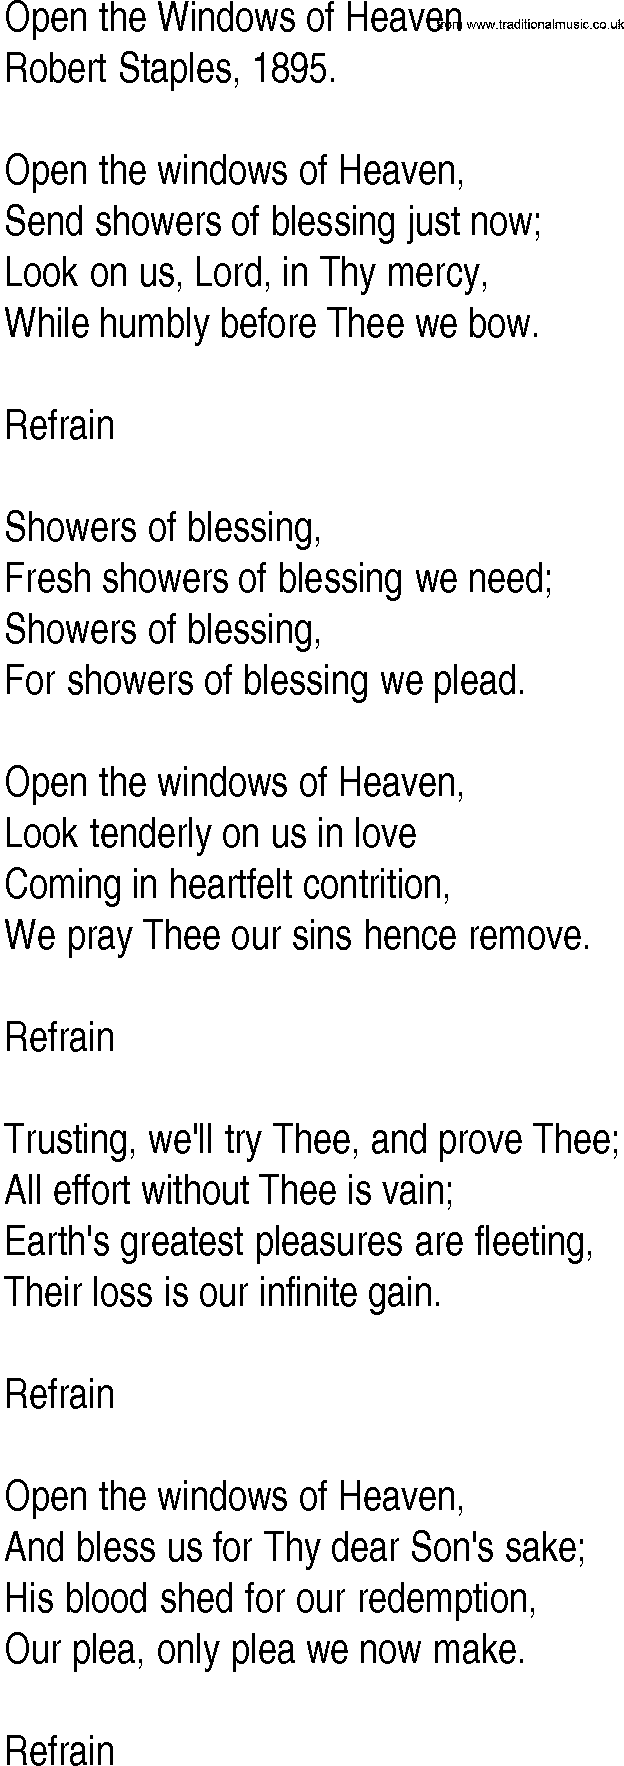 Hymn and Gospel Song: Open the Windows of Heaven by Robert Staples lyrics